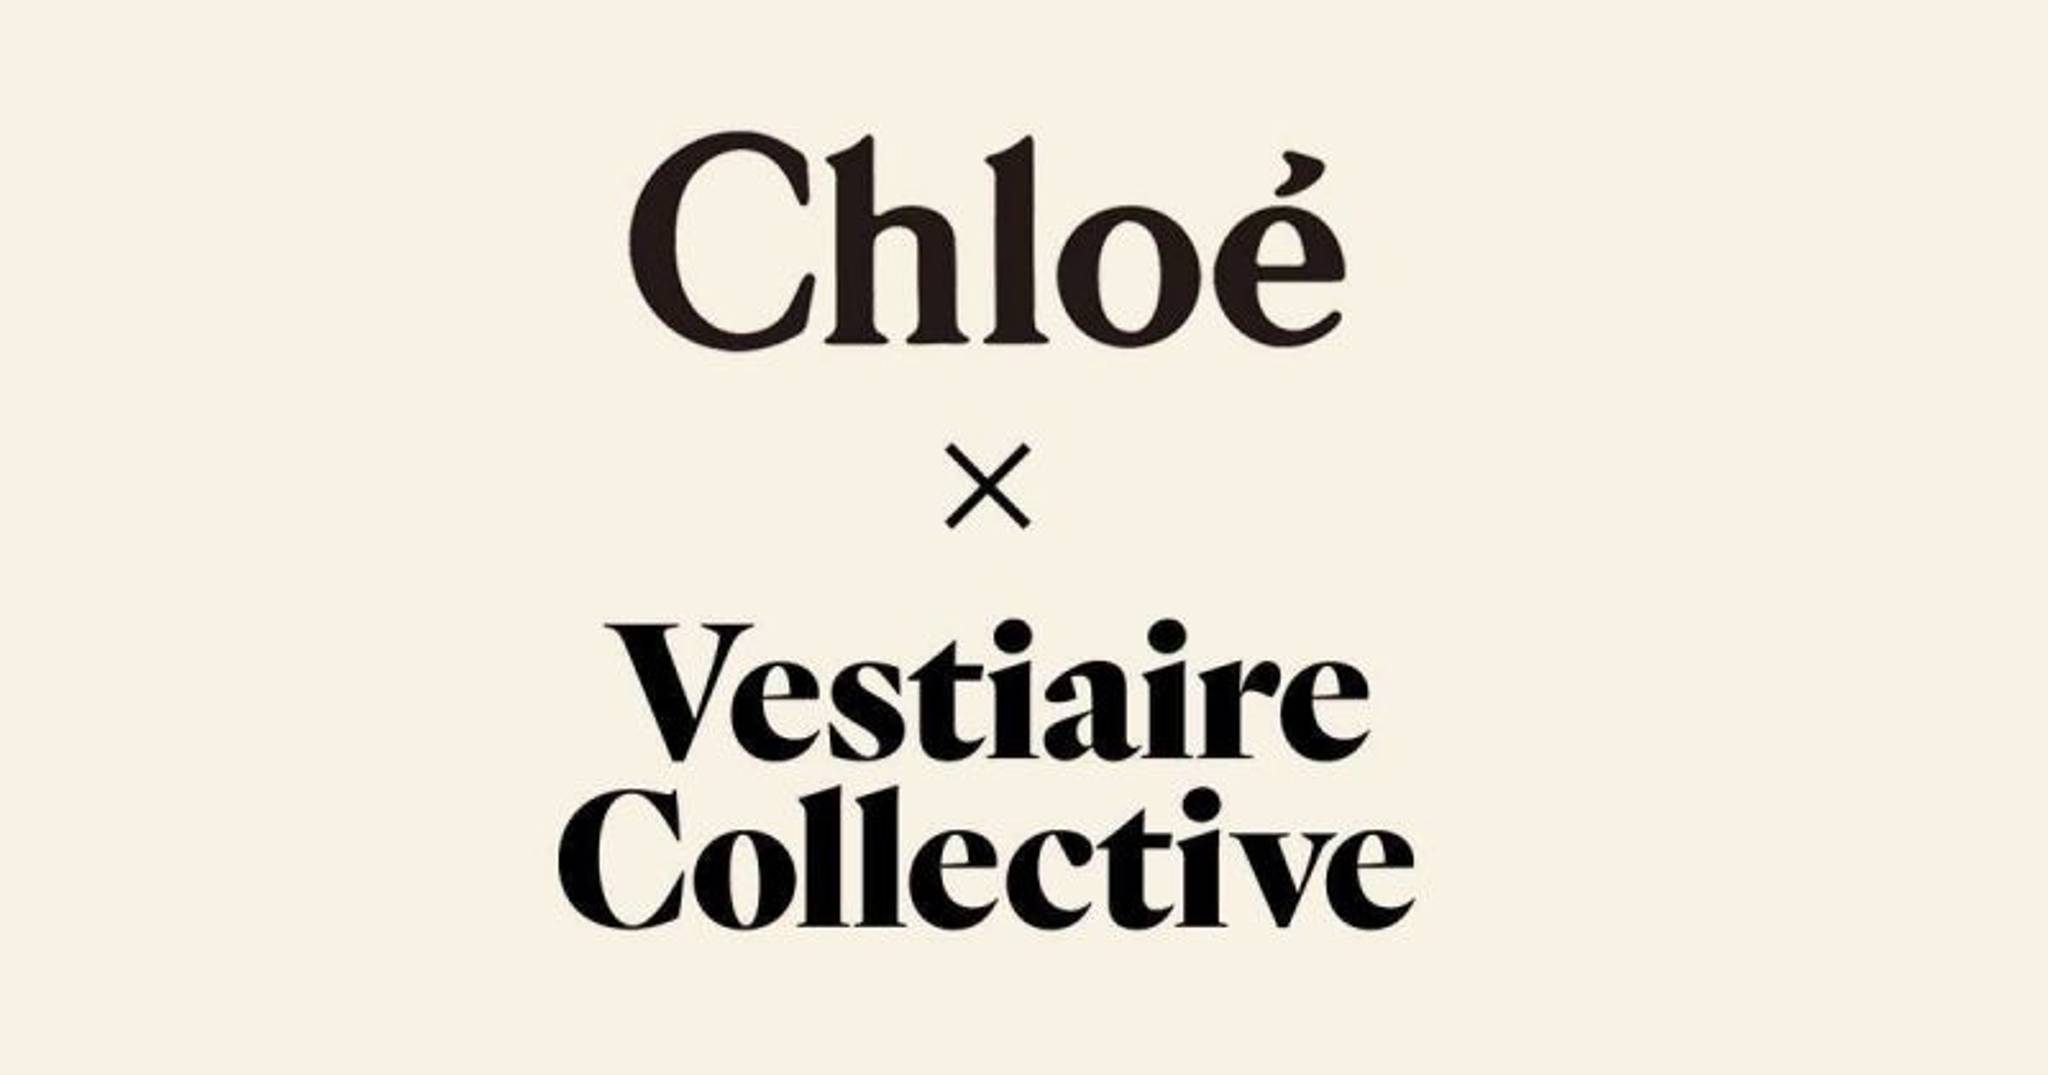 Chloé x Vesitaire Collective drives sustainable luxury